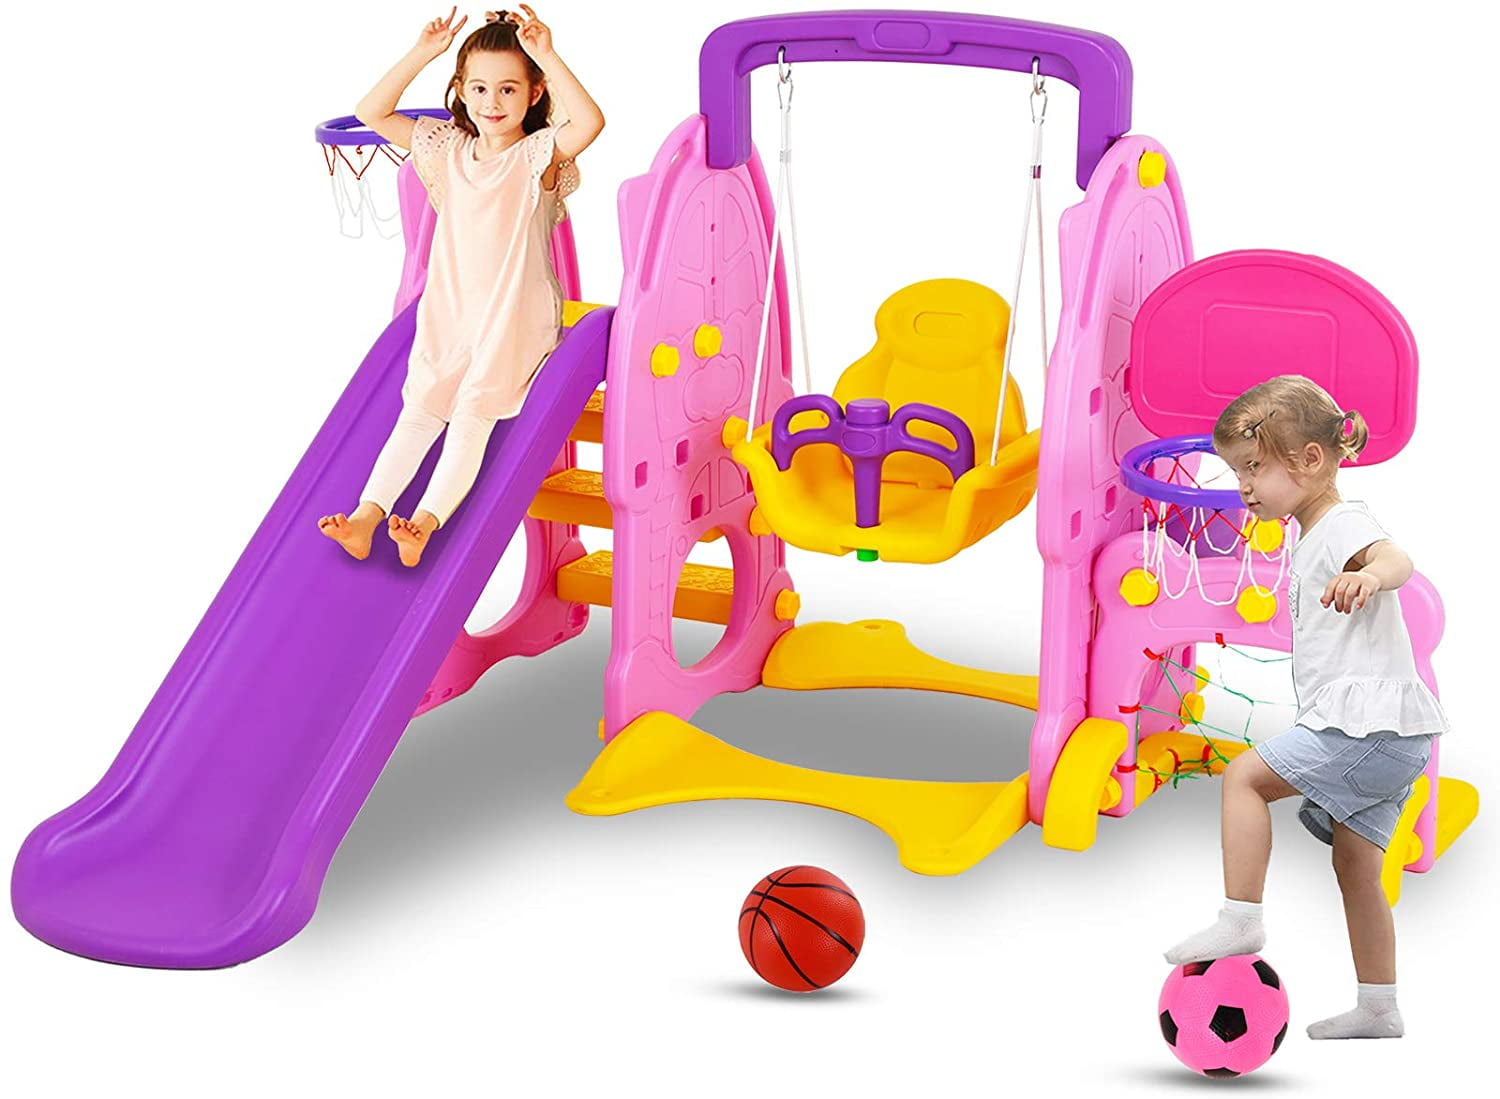 Playground Slide Set Play Slide Kids Backyard Swing set Play set Indoor/Outdoor| 